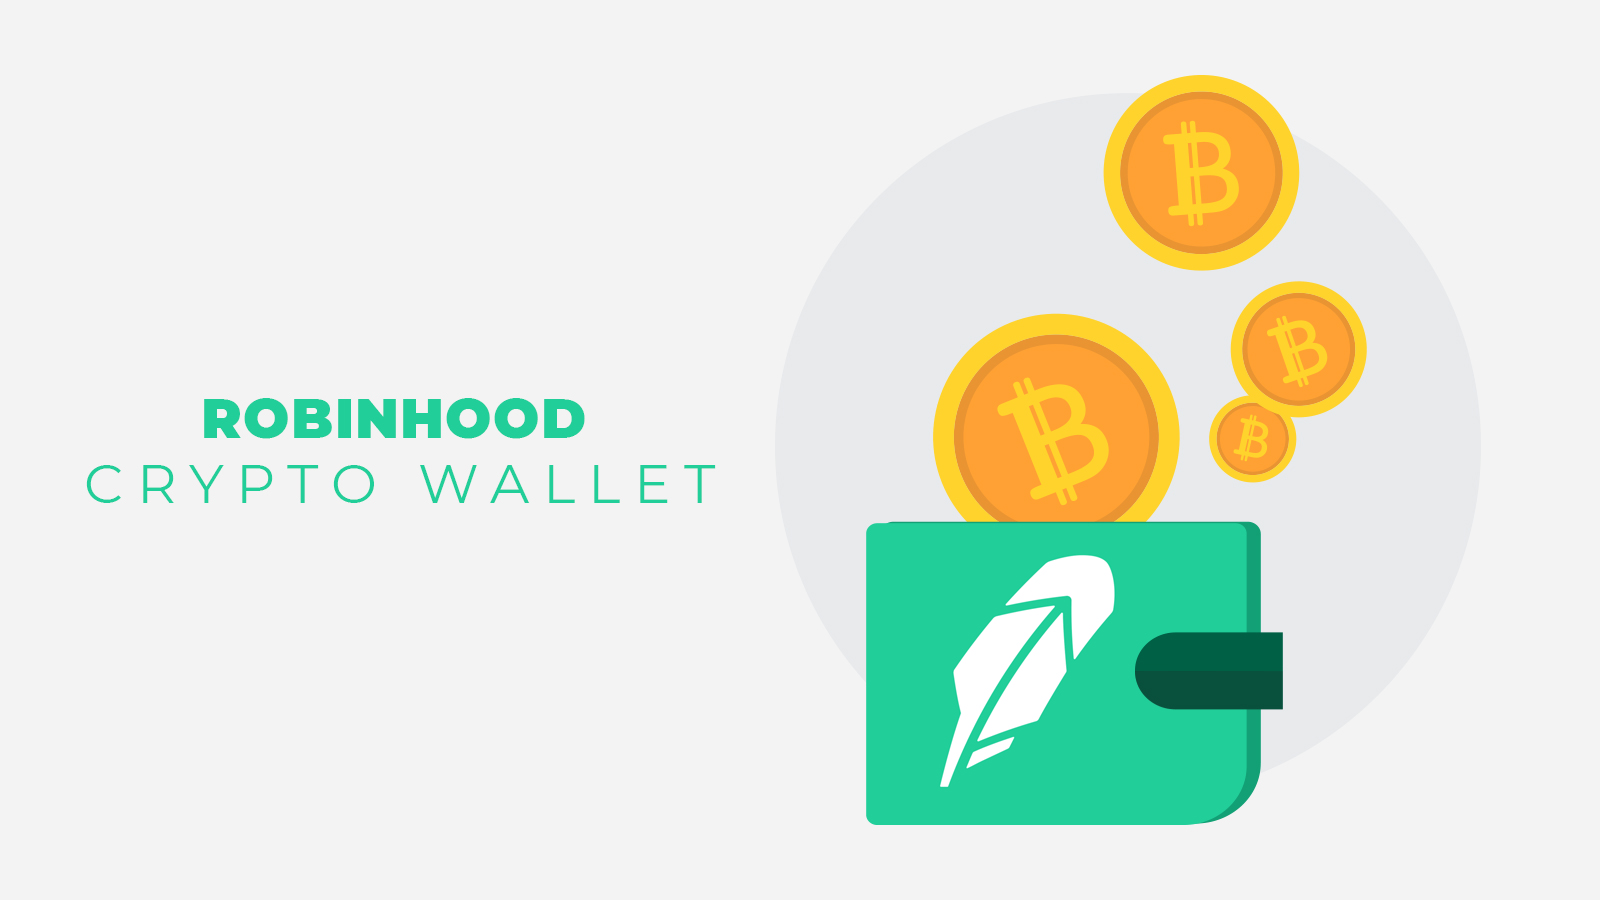 Robinhood Crypto Wallet Plans to Grow Crypto Operations